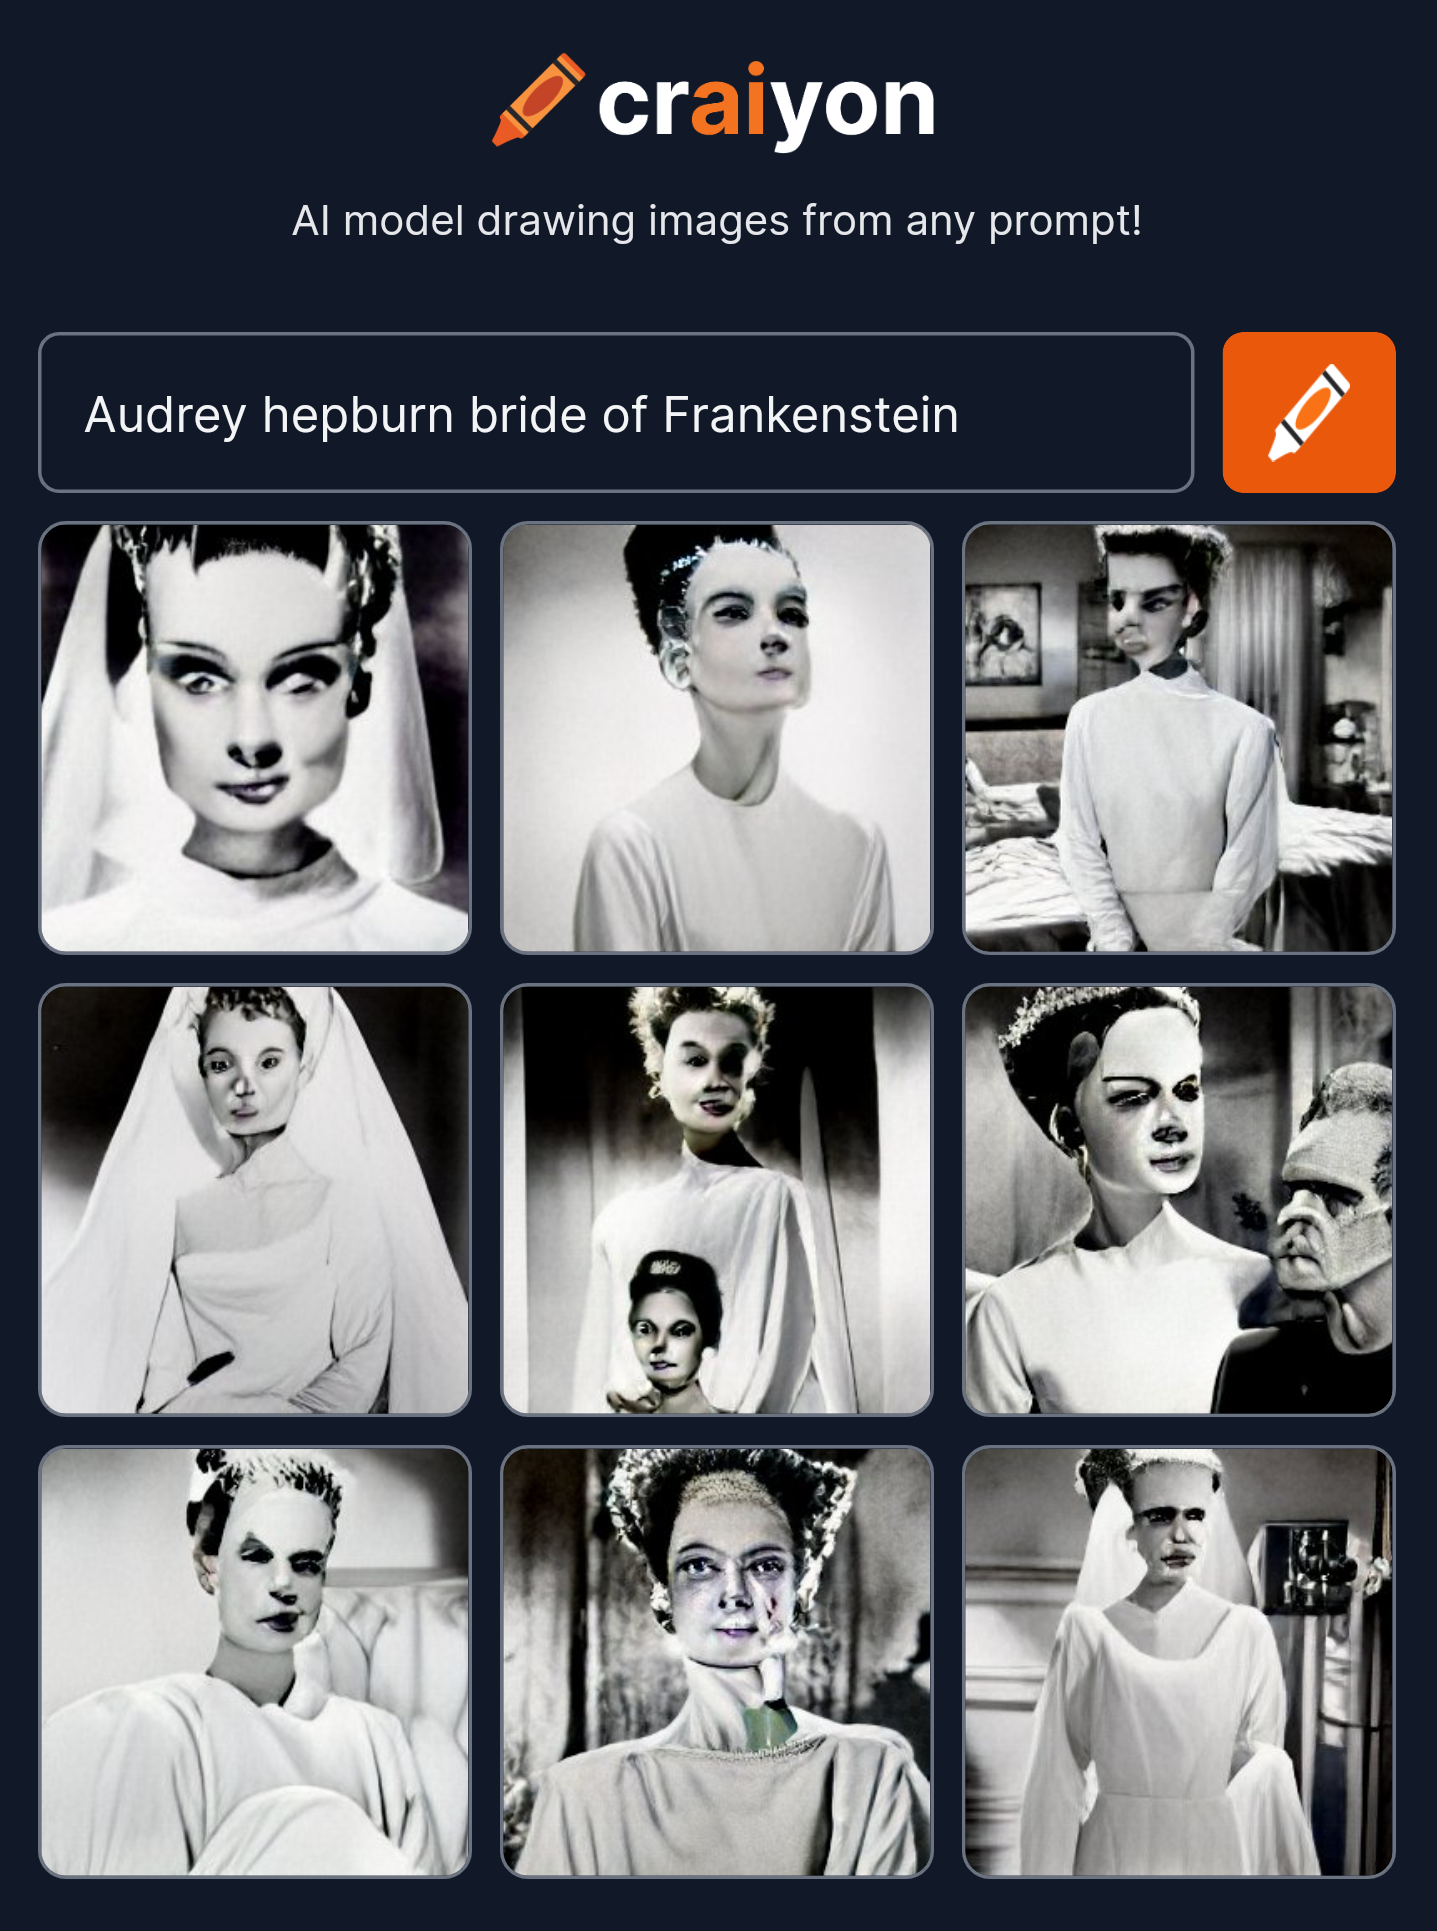 craiyon_015121_Audrey_hepburn_bride_of_Frankenstein_nbsp_.png